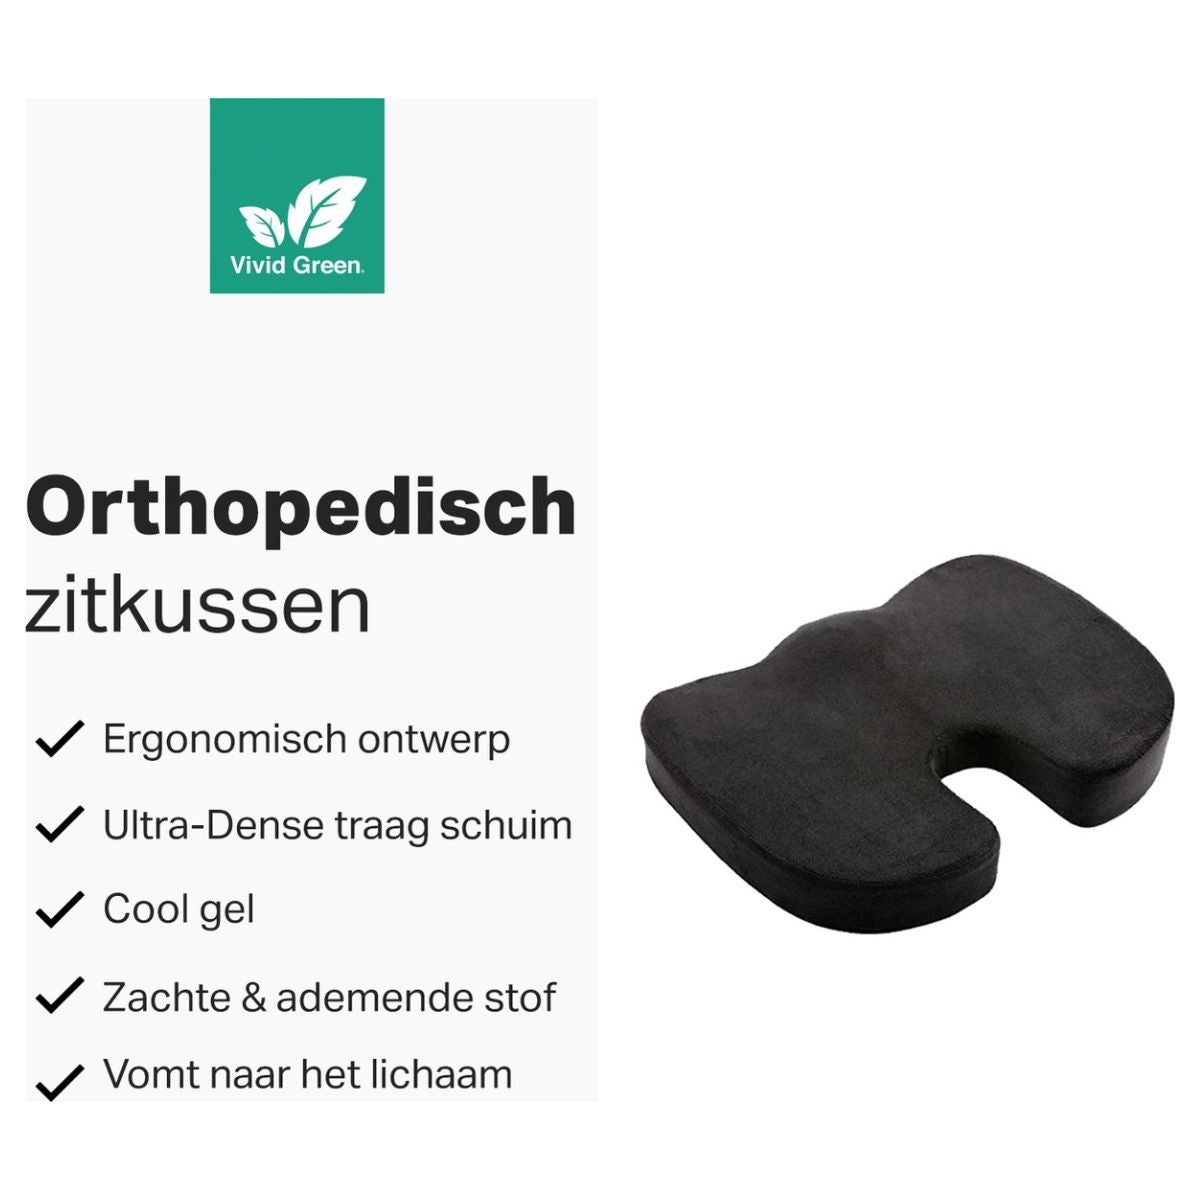 Zitkussen - Orthopedisch & Ergonomisch